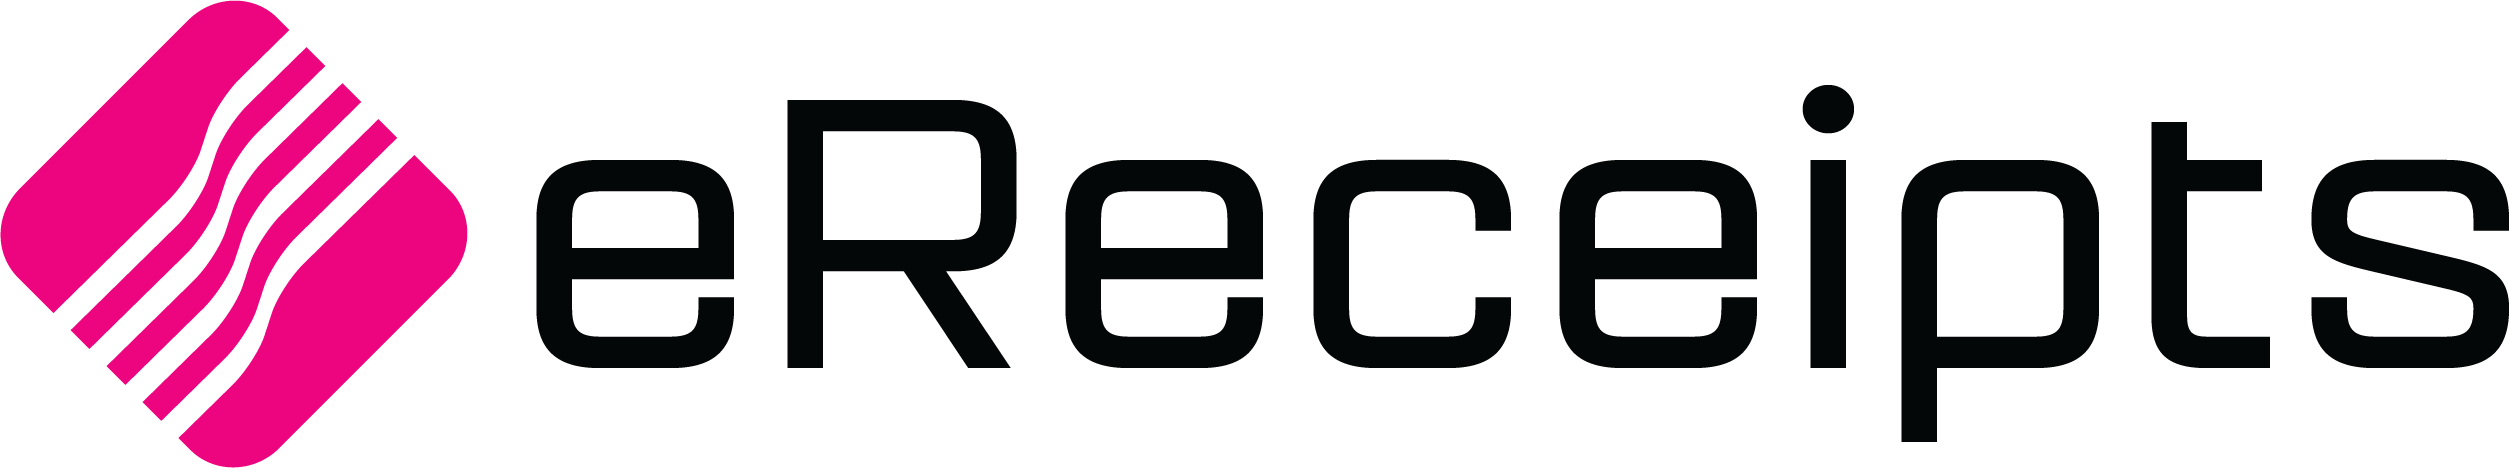 eReceipts Logo